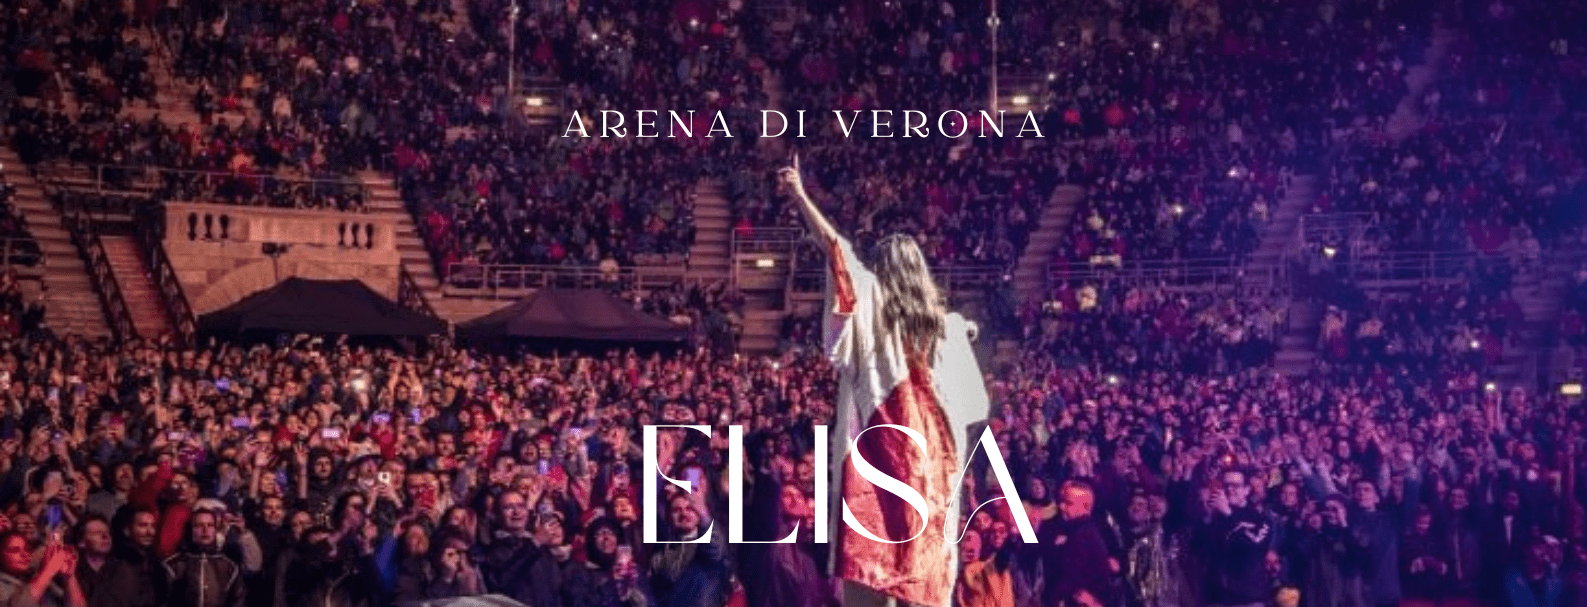 elisa-verona-tickets-biglietti-concert-concerto-arena-di-verona